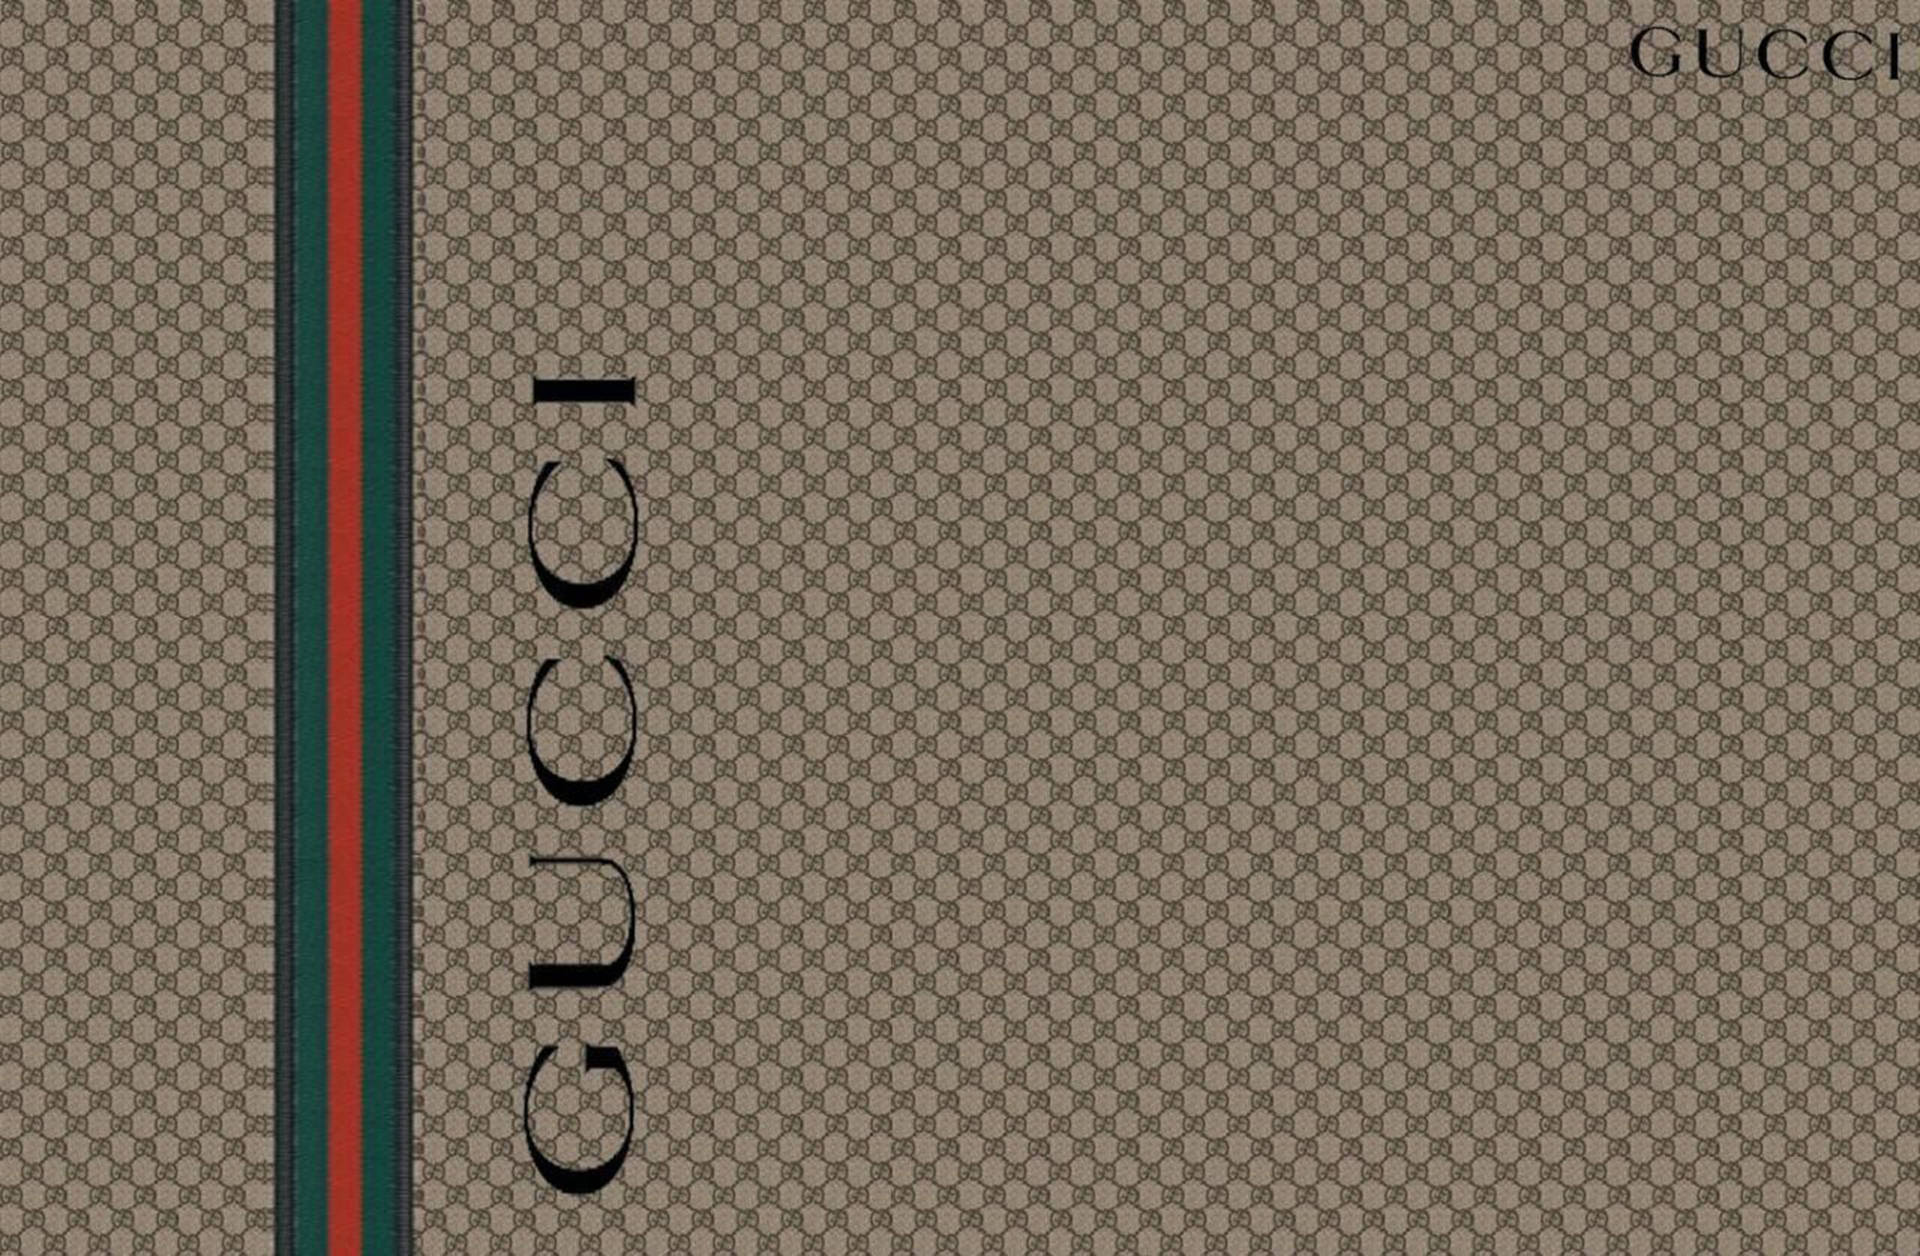 Brown Diamante Gucci Pattern Background